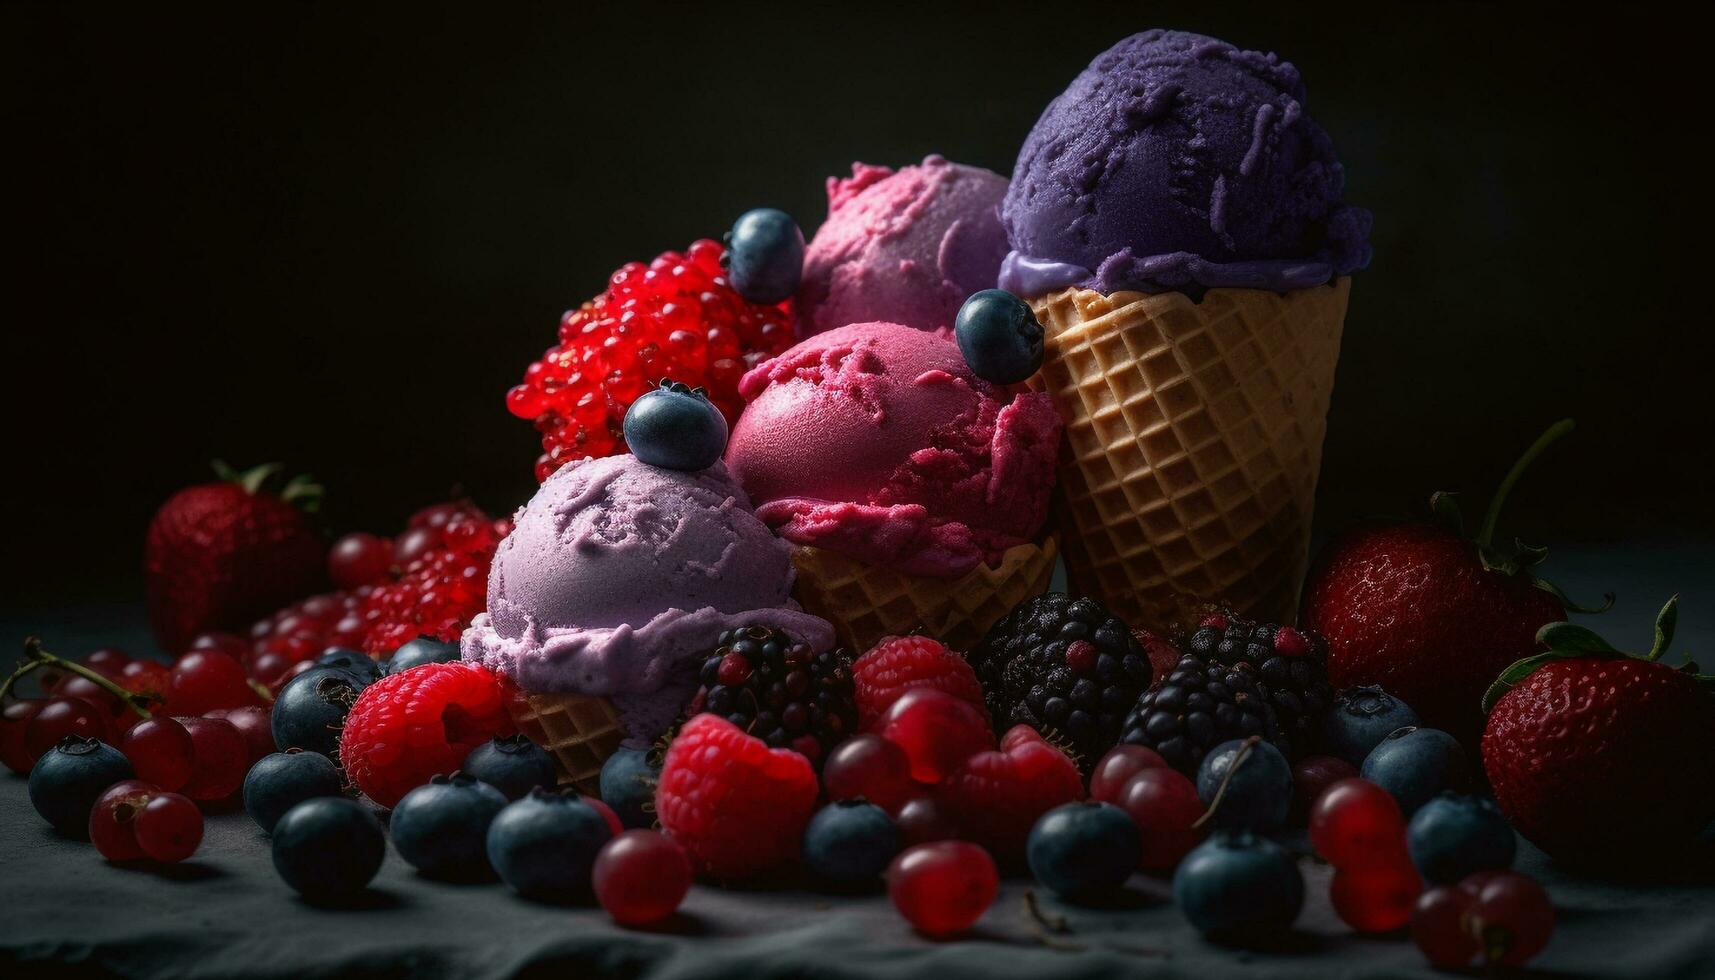 Sweet summer indulgence  gourmet berry ice cream sundae generated by AI photo